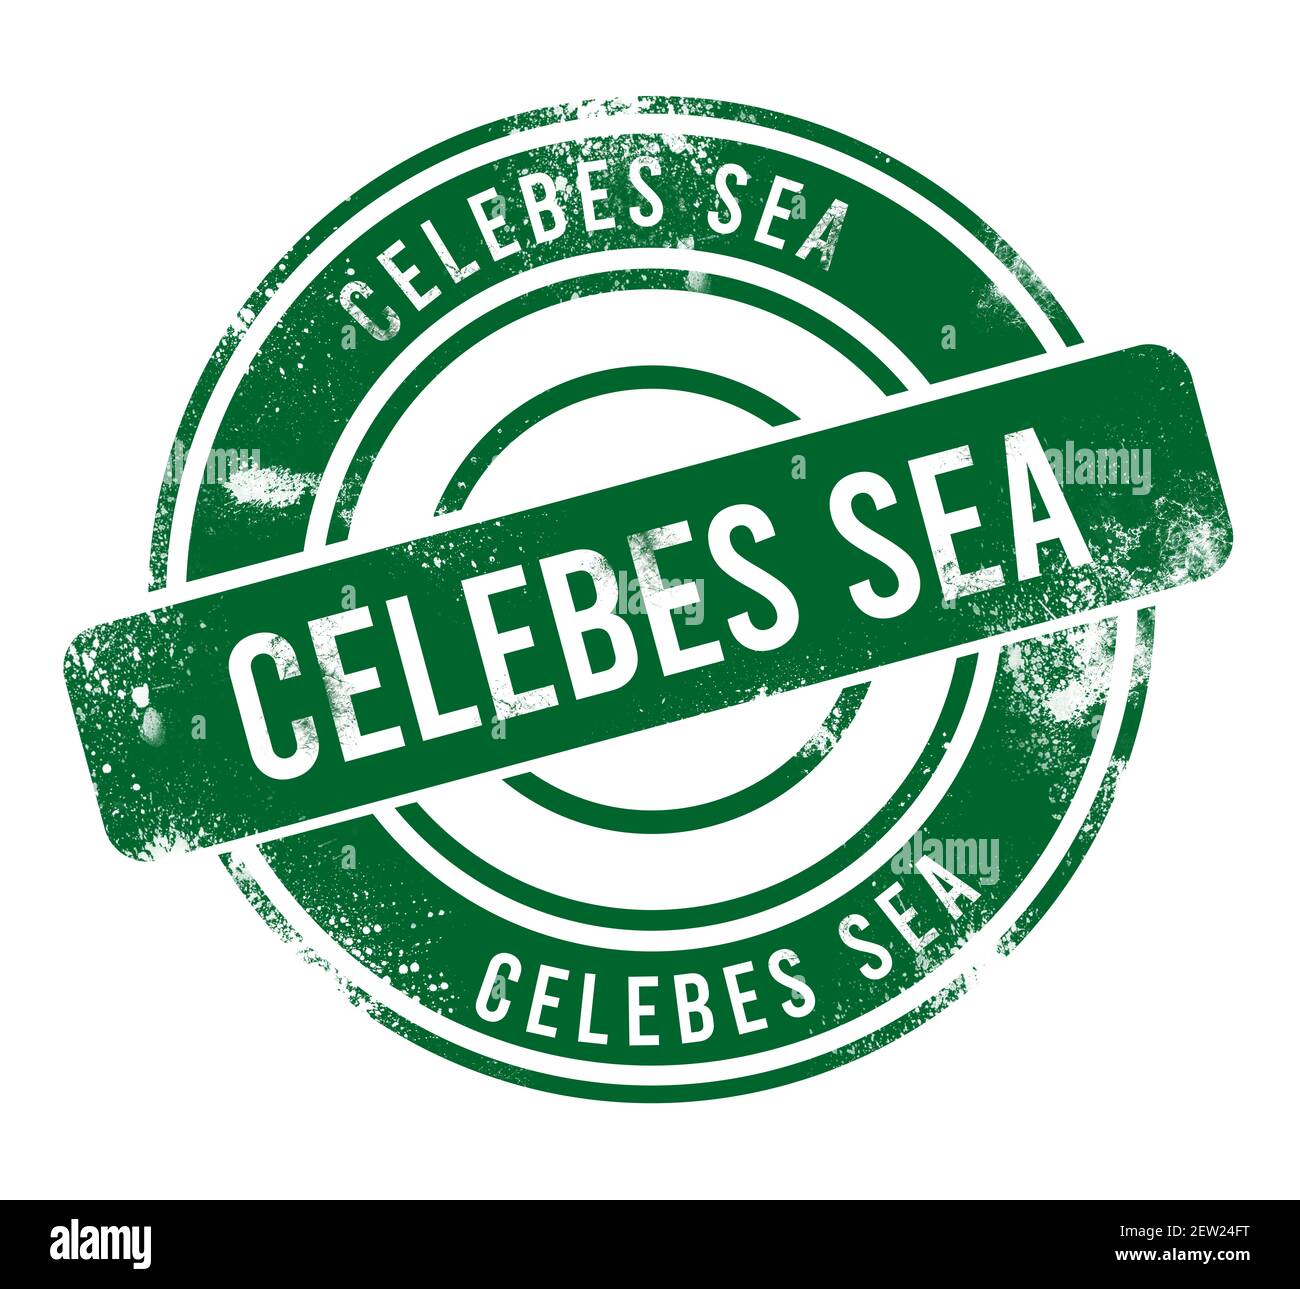 Celebes Sea - green round grunge button, stamp Stock Photo